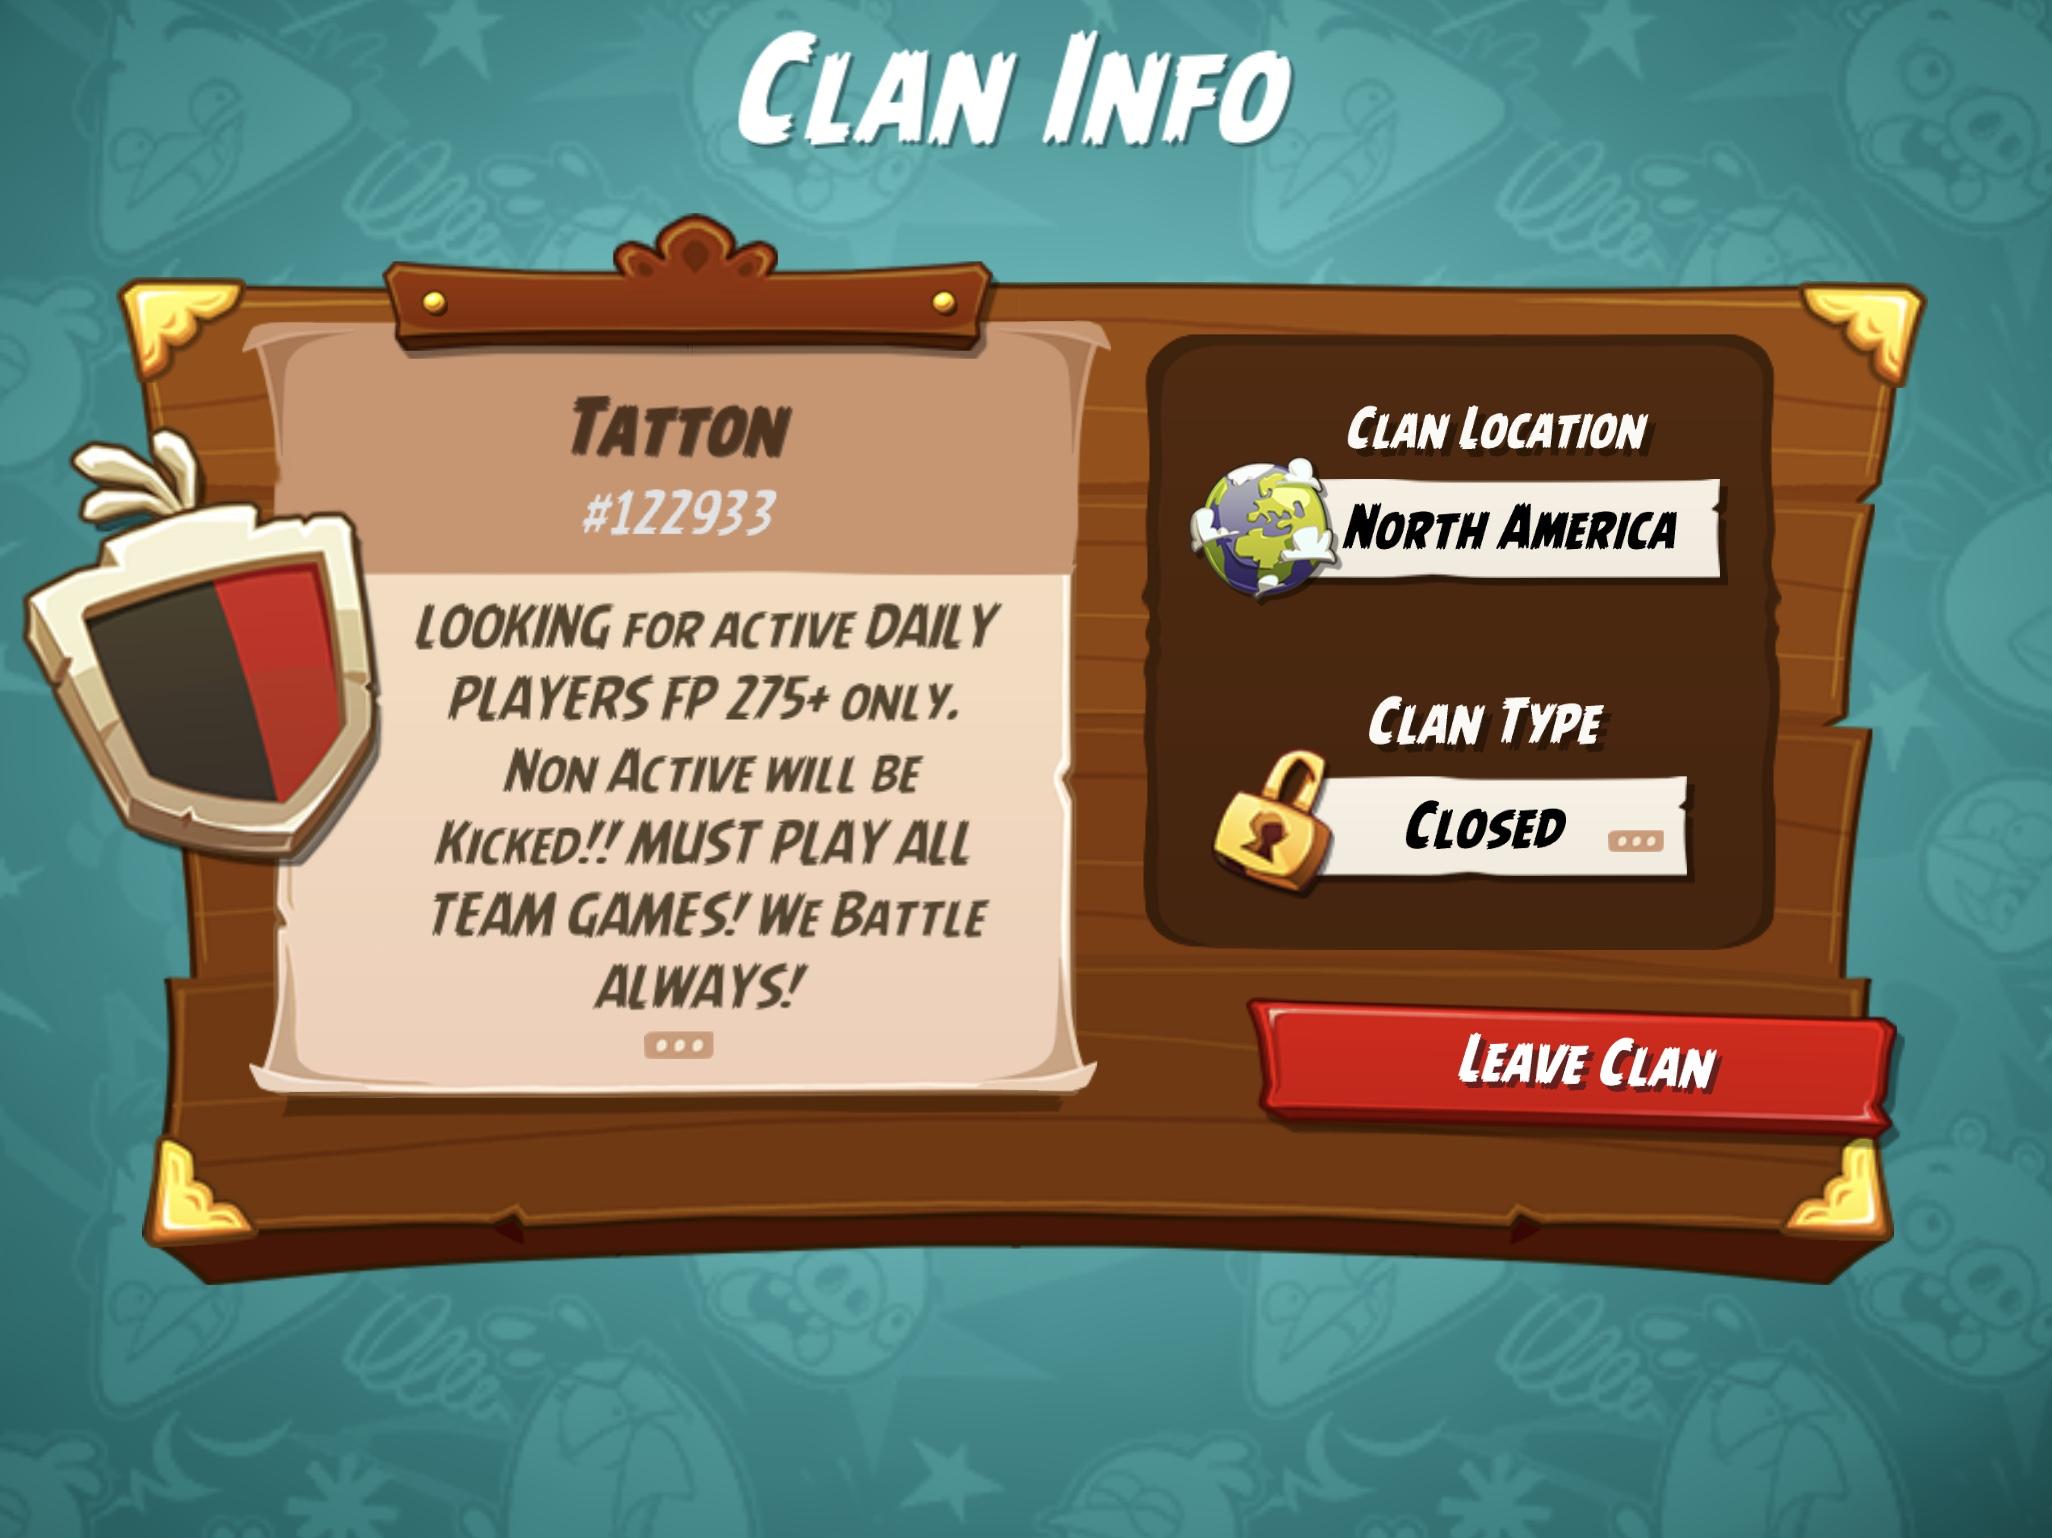 Clan info Tatton